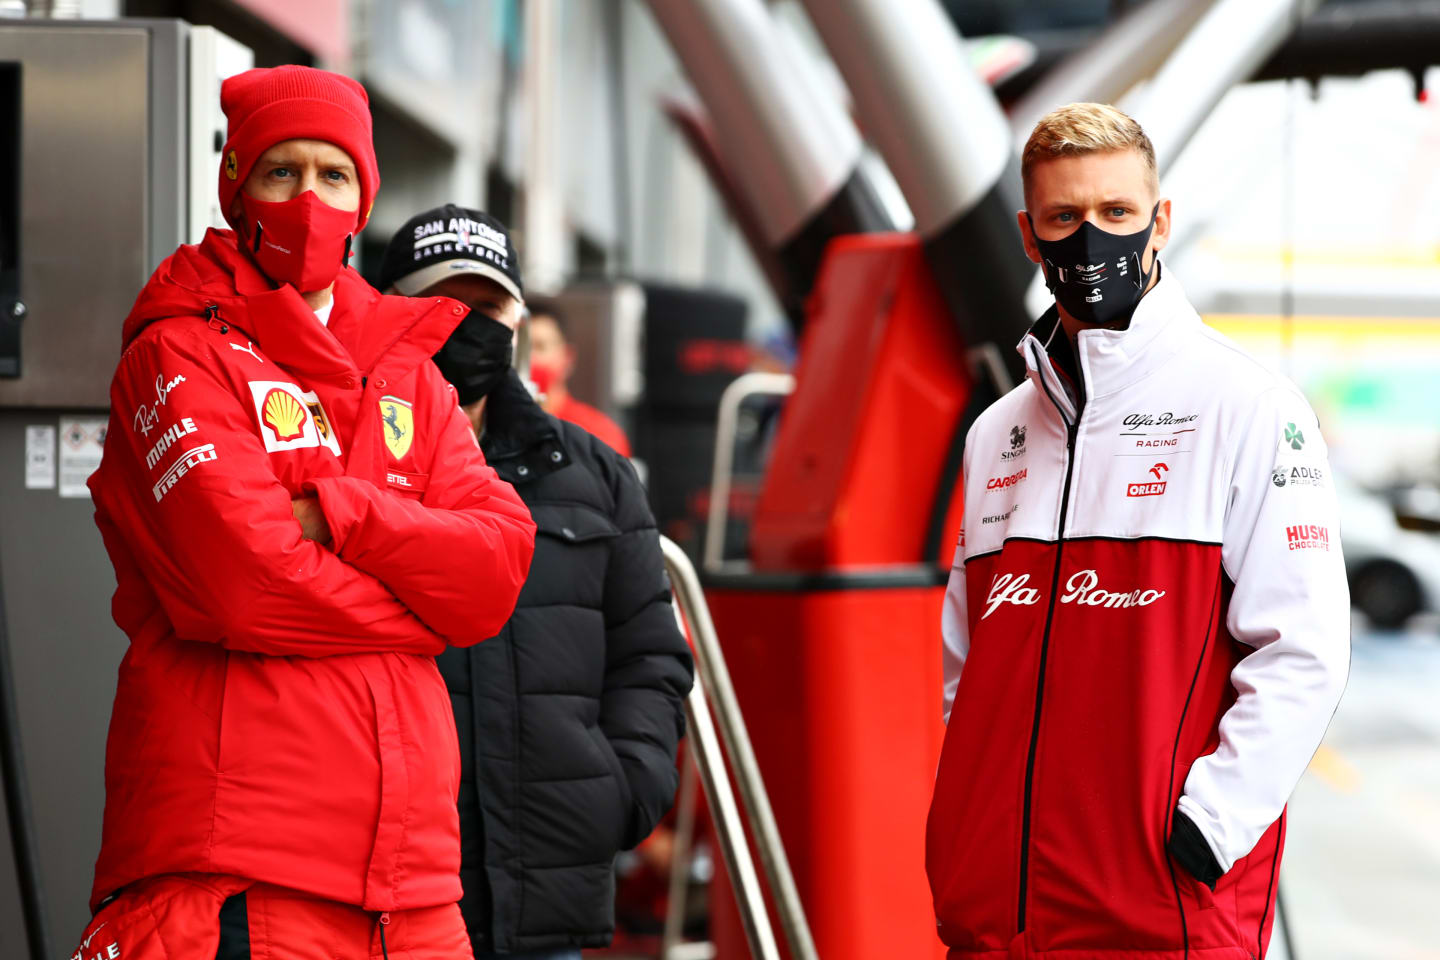 NUERBURG, GERMANY - OCTOBER 09: Sebastian Vettel of Germany and Ferrari and Mick Schumacher of